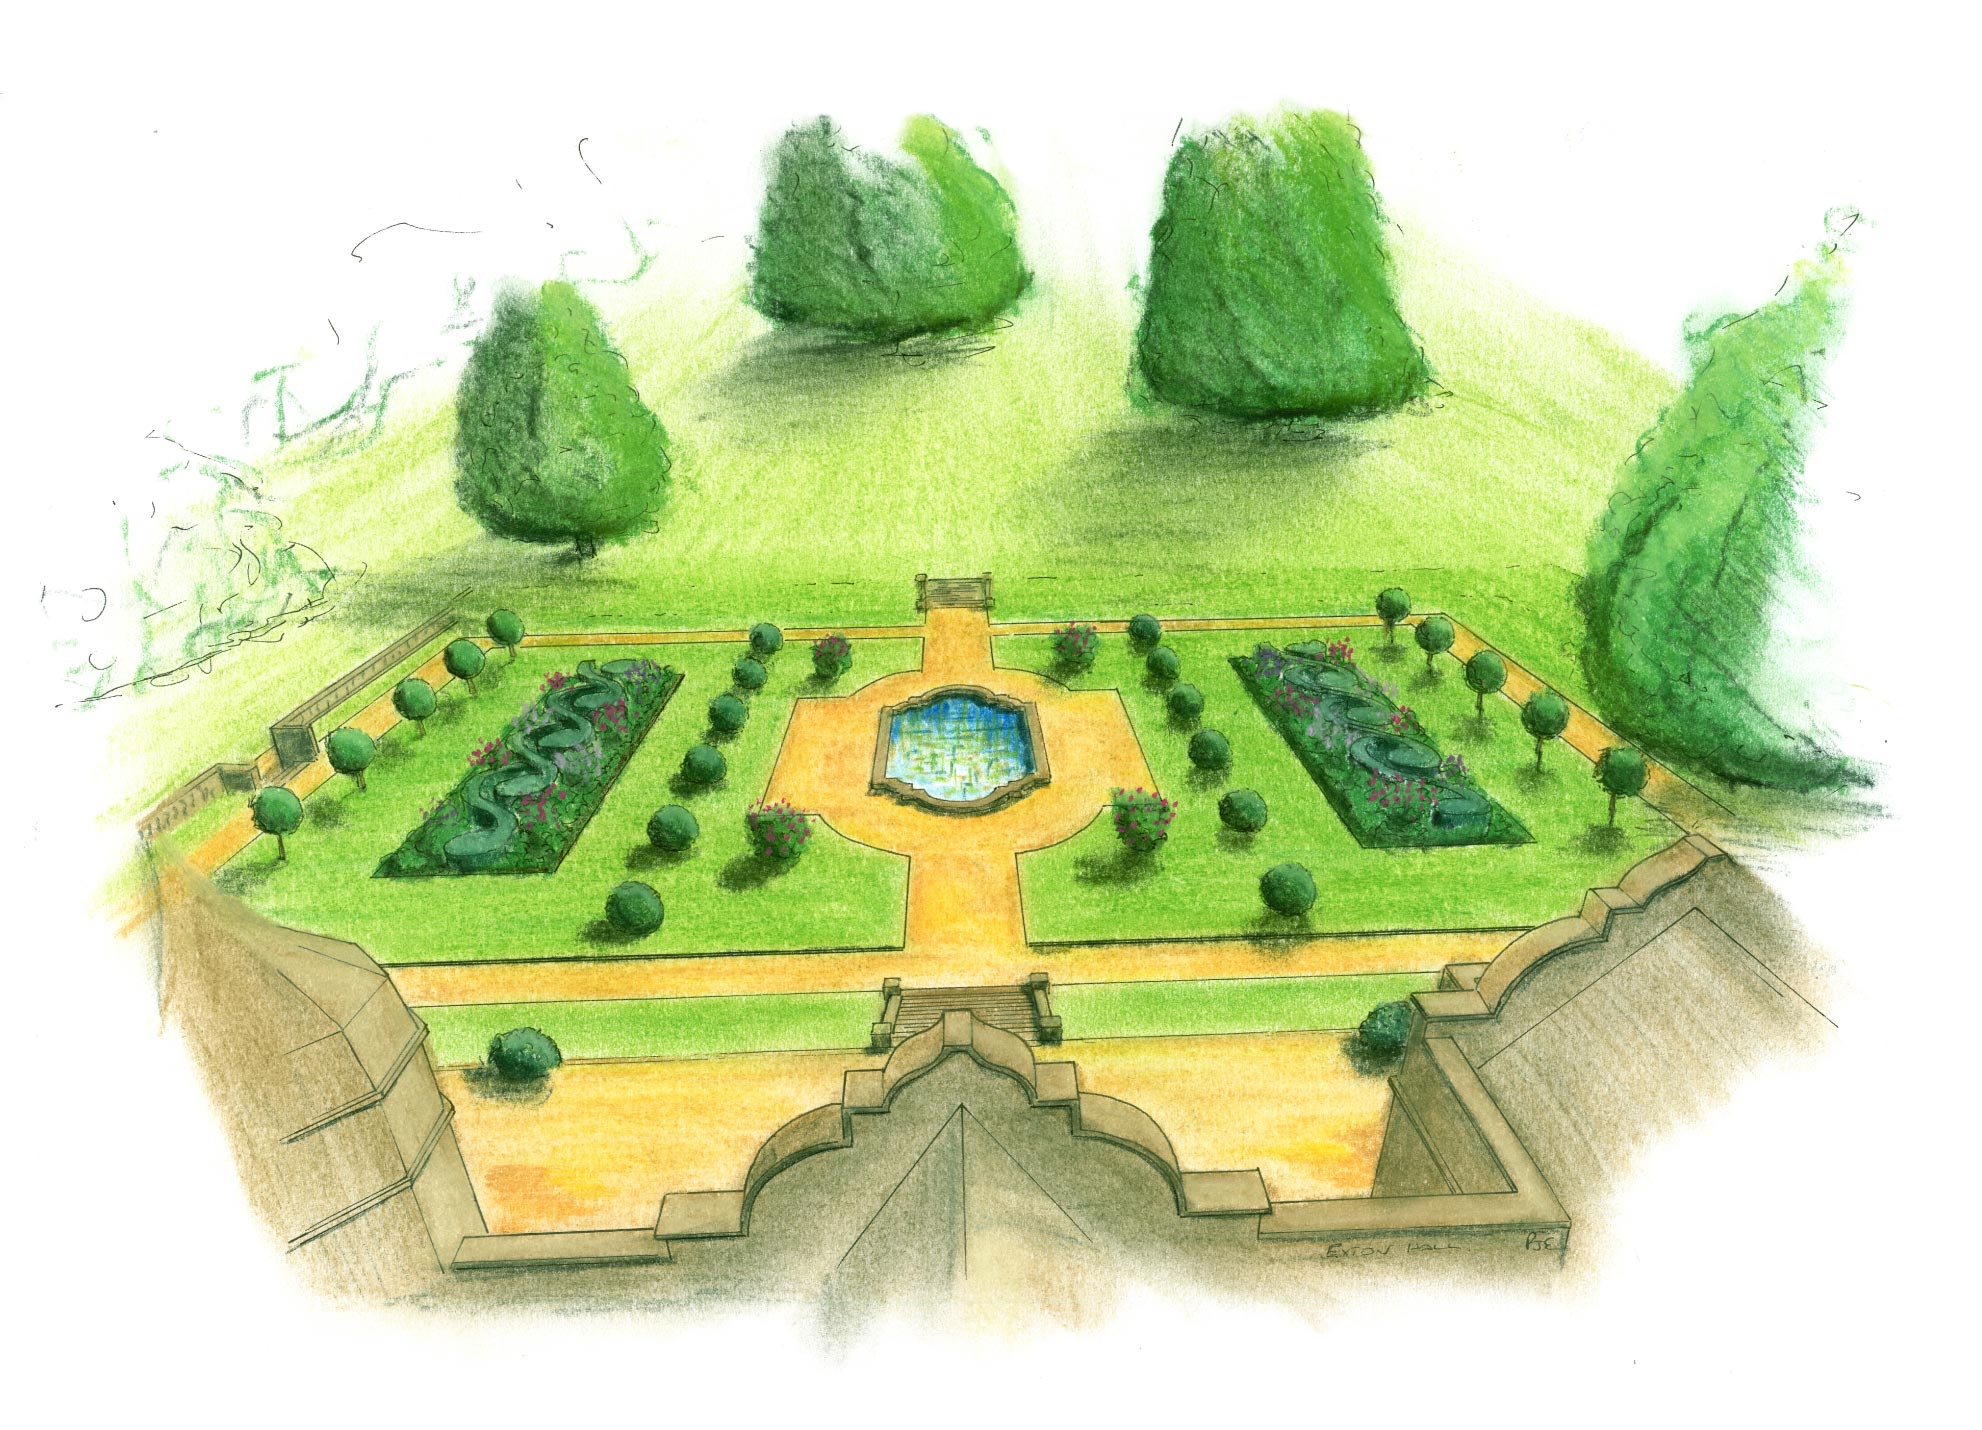 Exton Hall design sketches for new formal garden